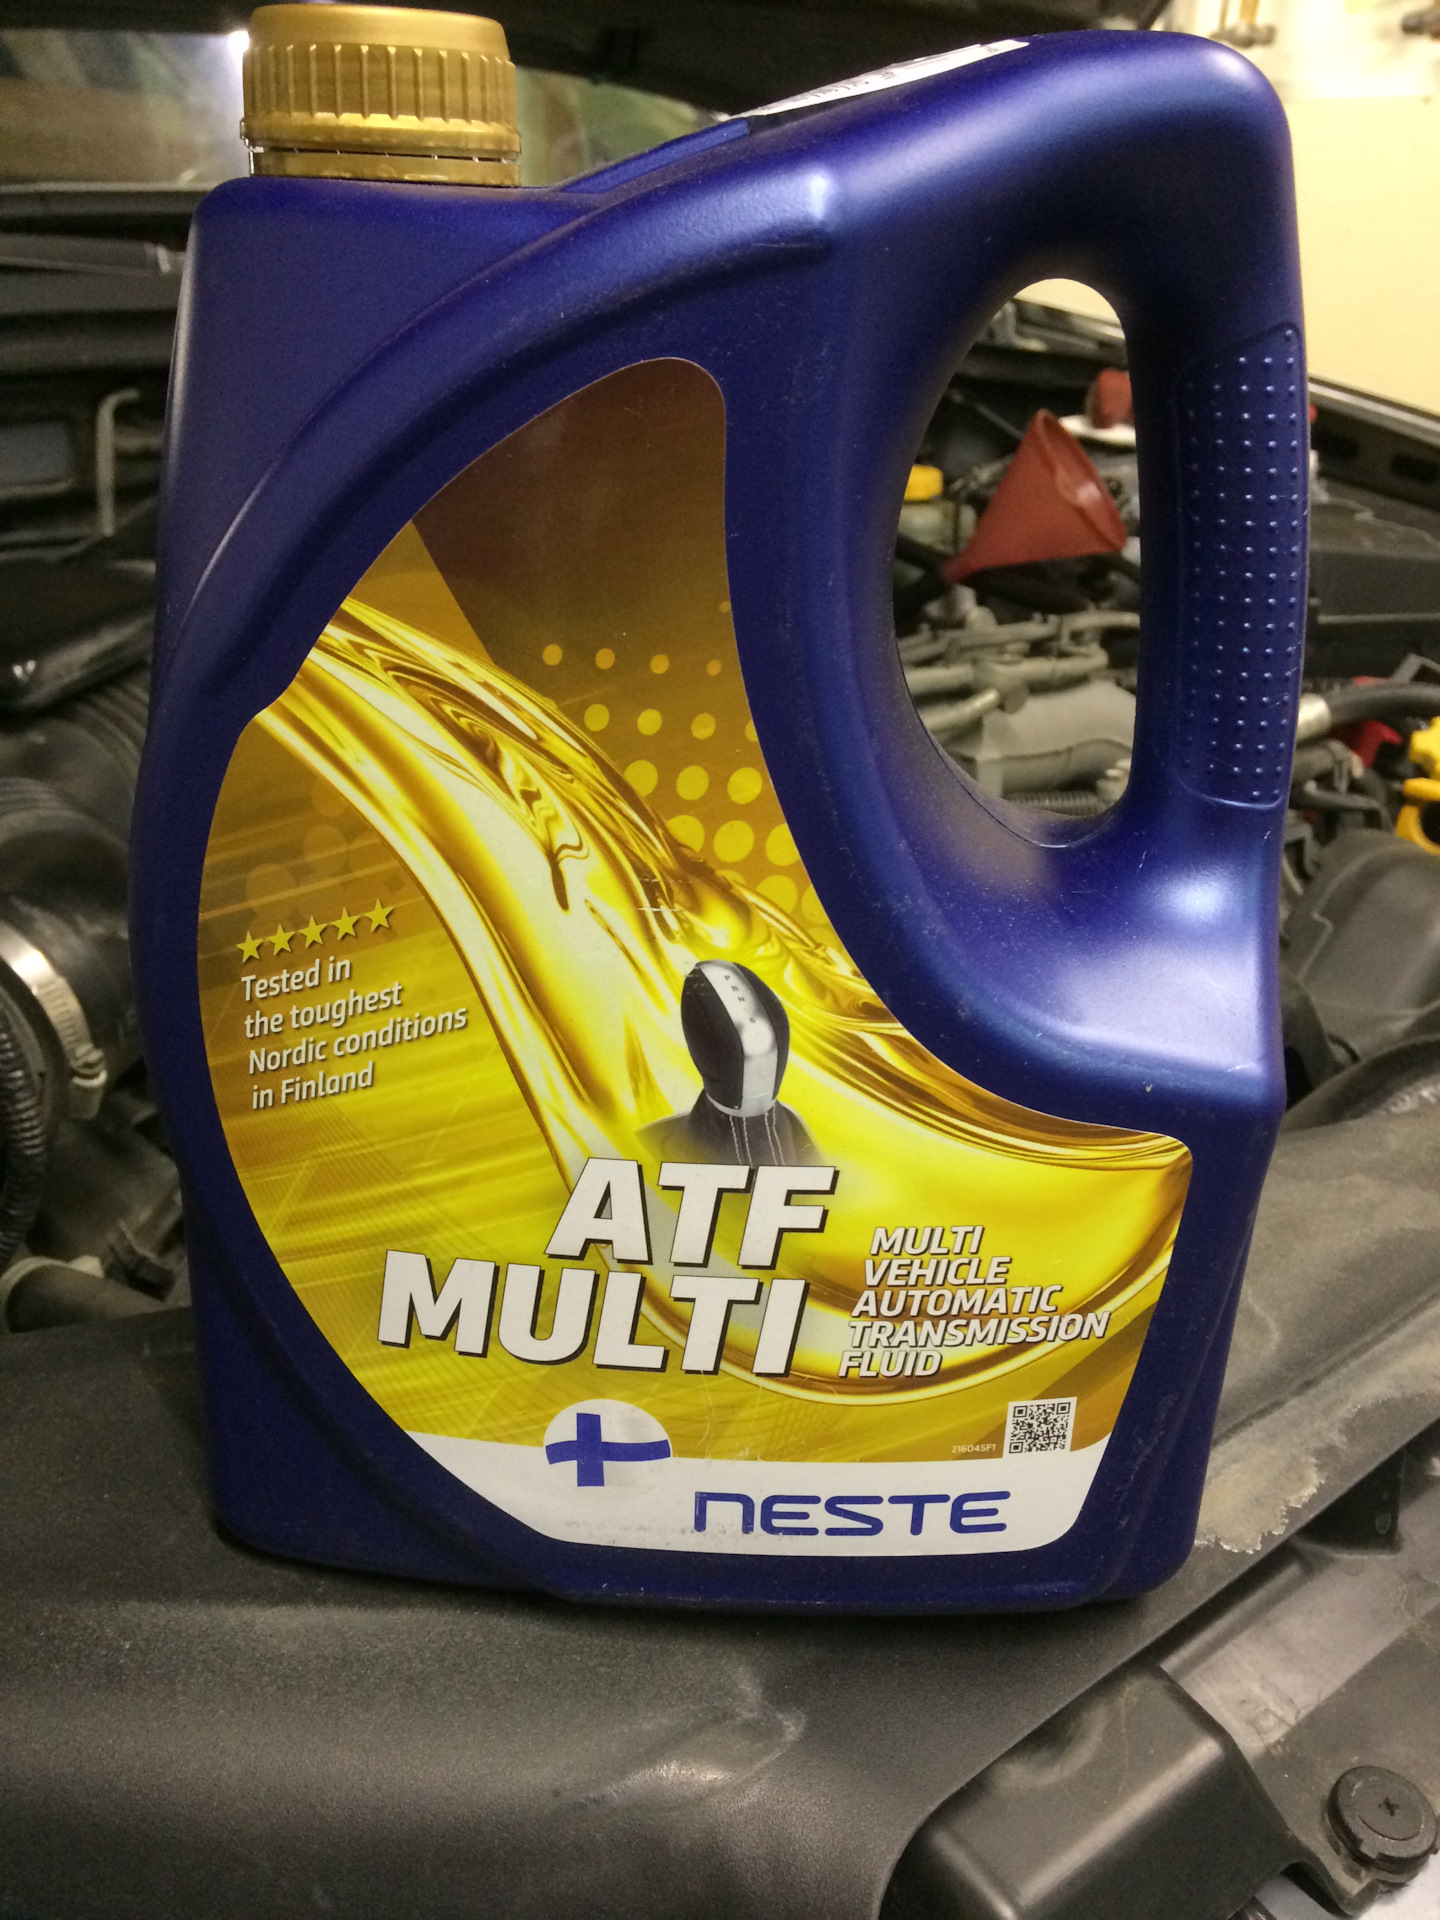 Neste Premium ATF Multi. Масло neste ATF Multi артикул. Neste ATF Multi подходит ли на коробку al4. Несте АТФ Мульти замена тайп т 4.